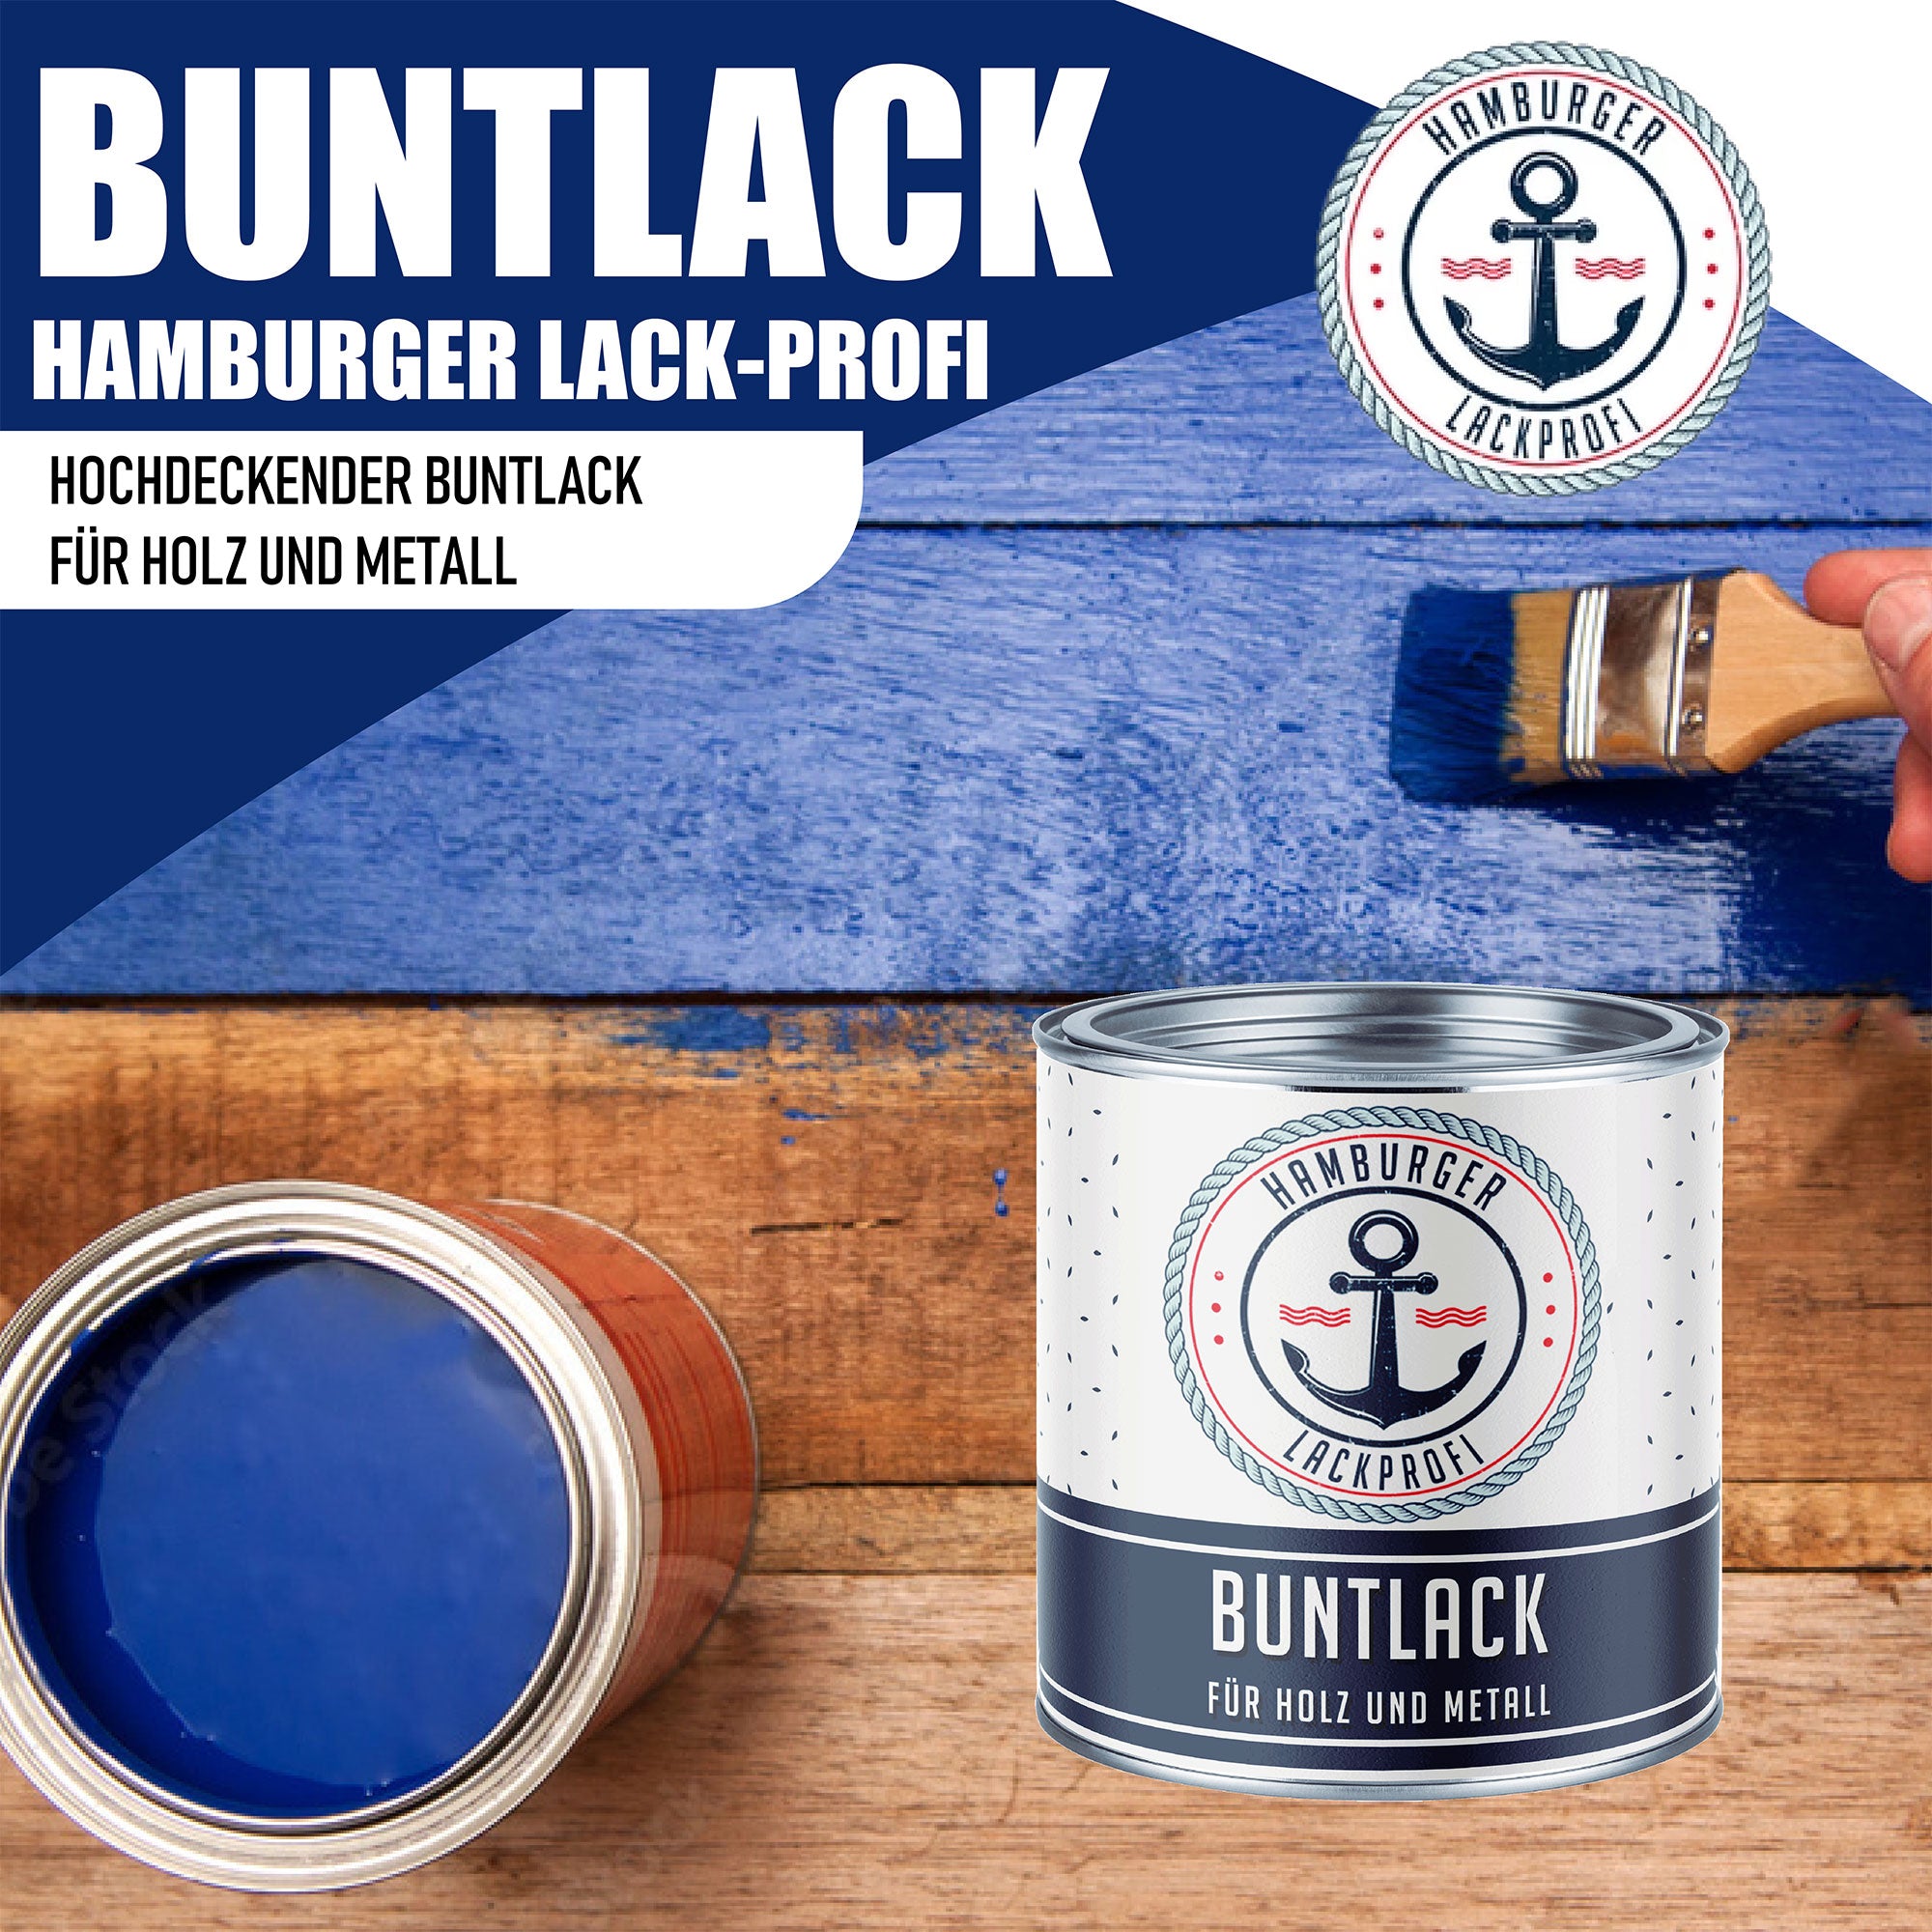 Hamburger Lack-Profi Buntlack Enzianblau RAL 5010 - Robuster Kunstharzlack